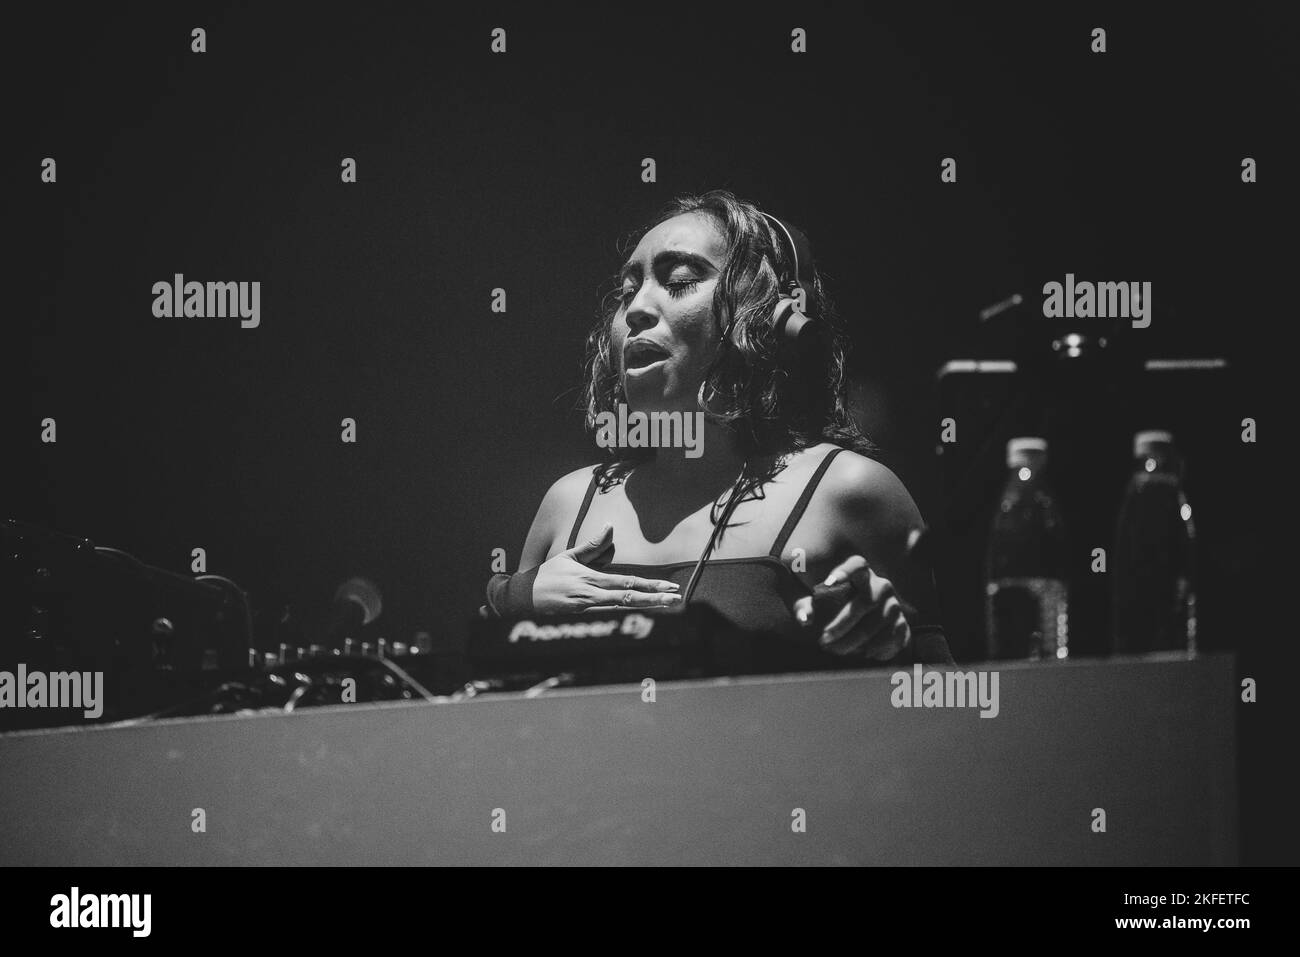 Kehlani live Black and White Stock Photos & Images - Alamy